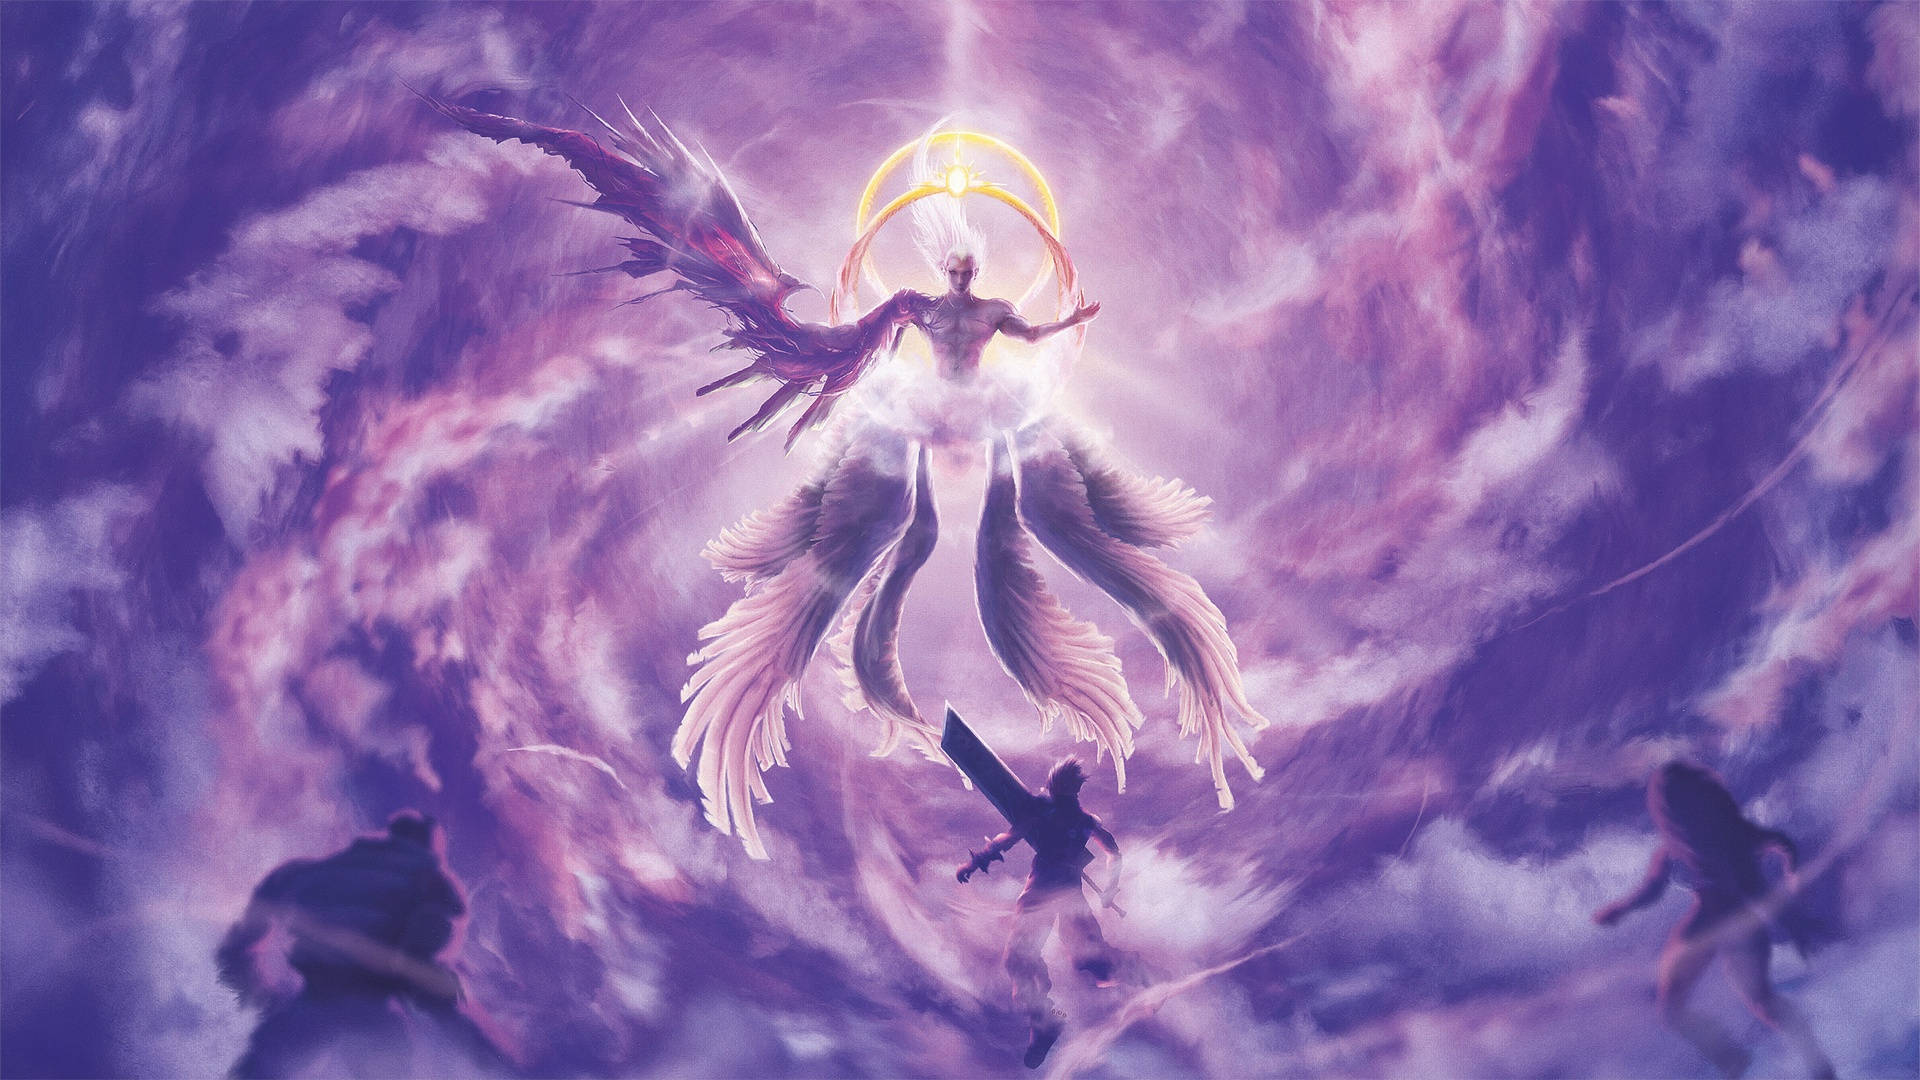 Sephiroth Alternate Form Background